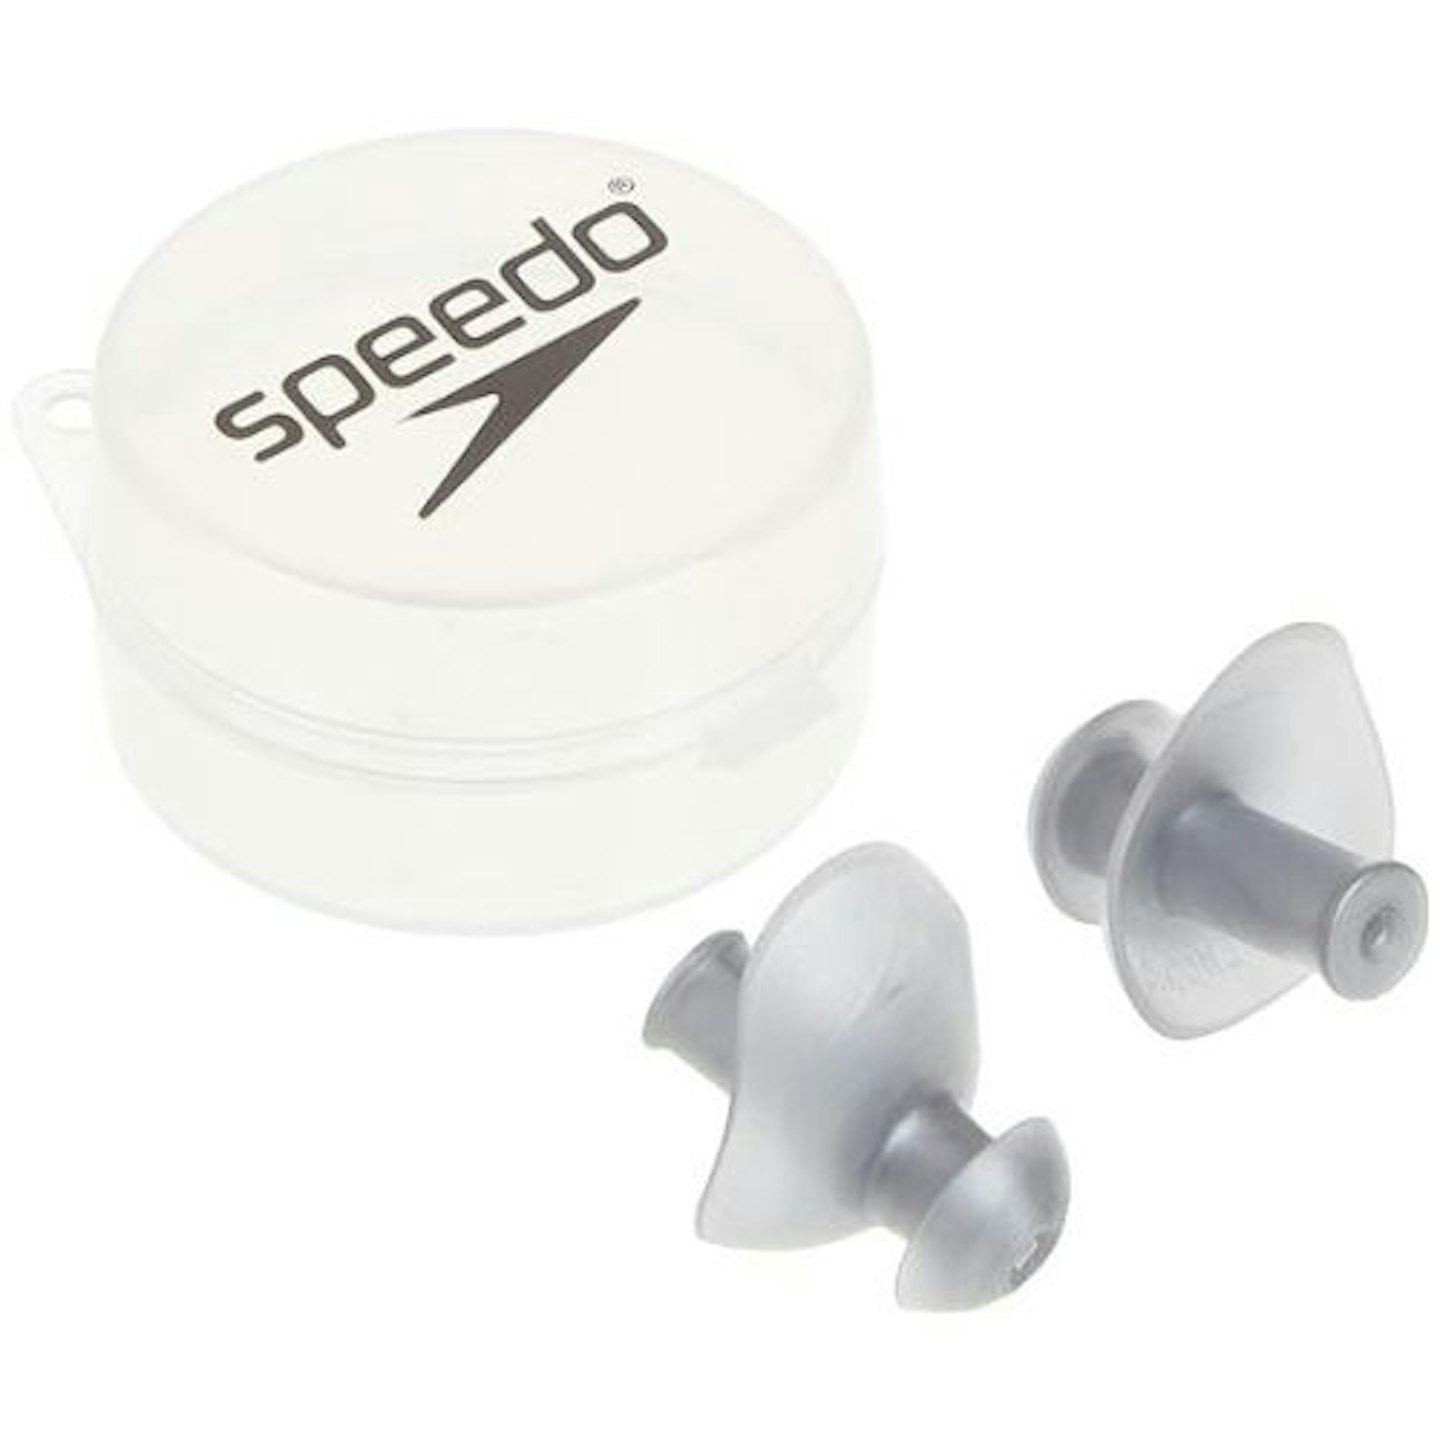 Speedo Unisex Swim Training Ergo Ear Plugs